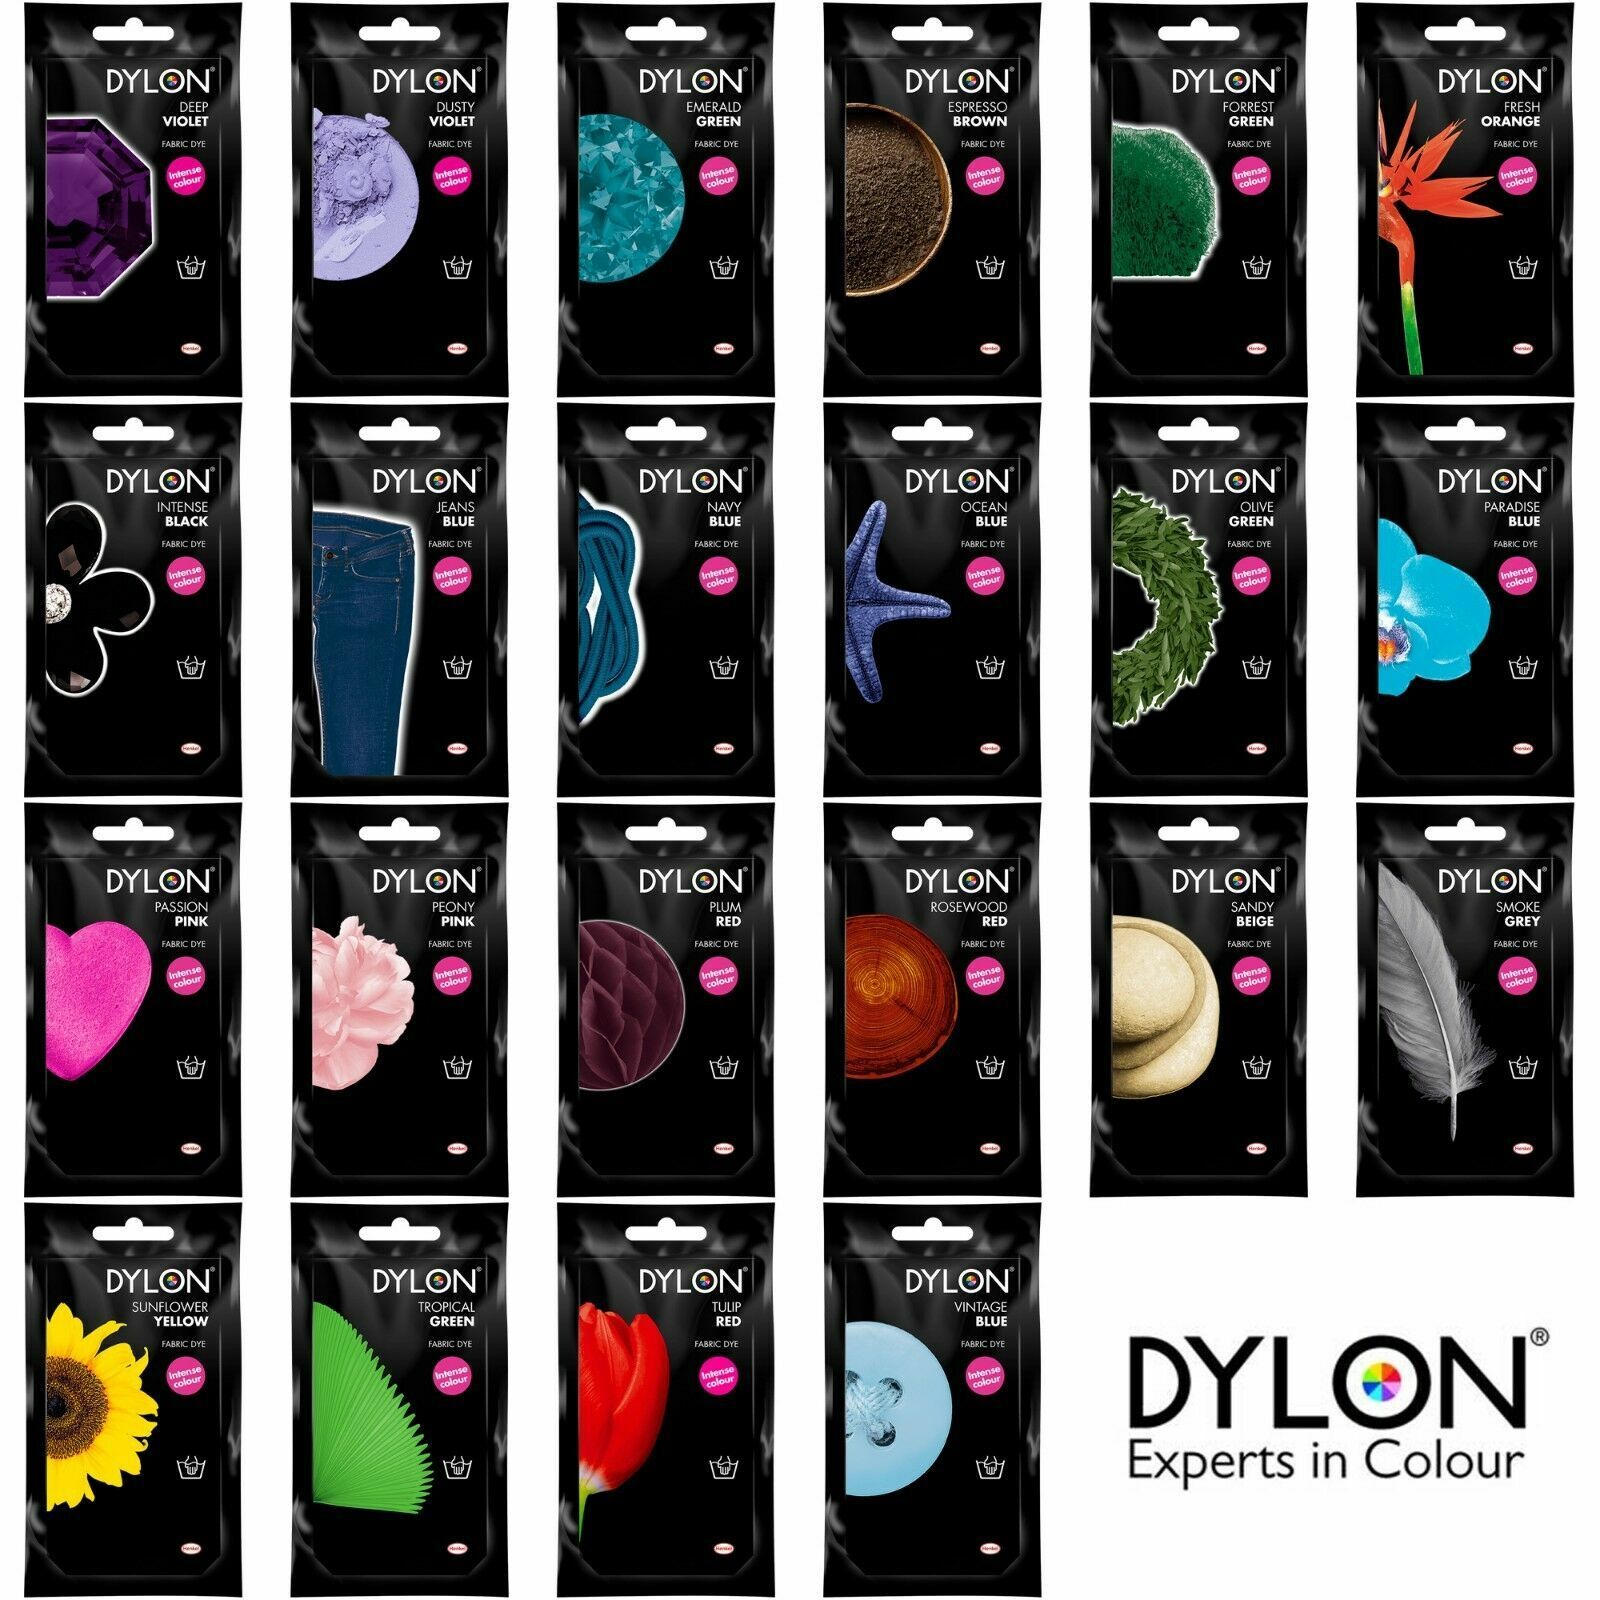 350g Dylon Velvet Black Machine Wash Colour Fabric Dye